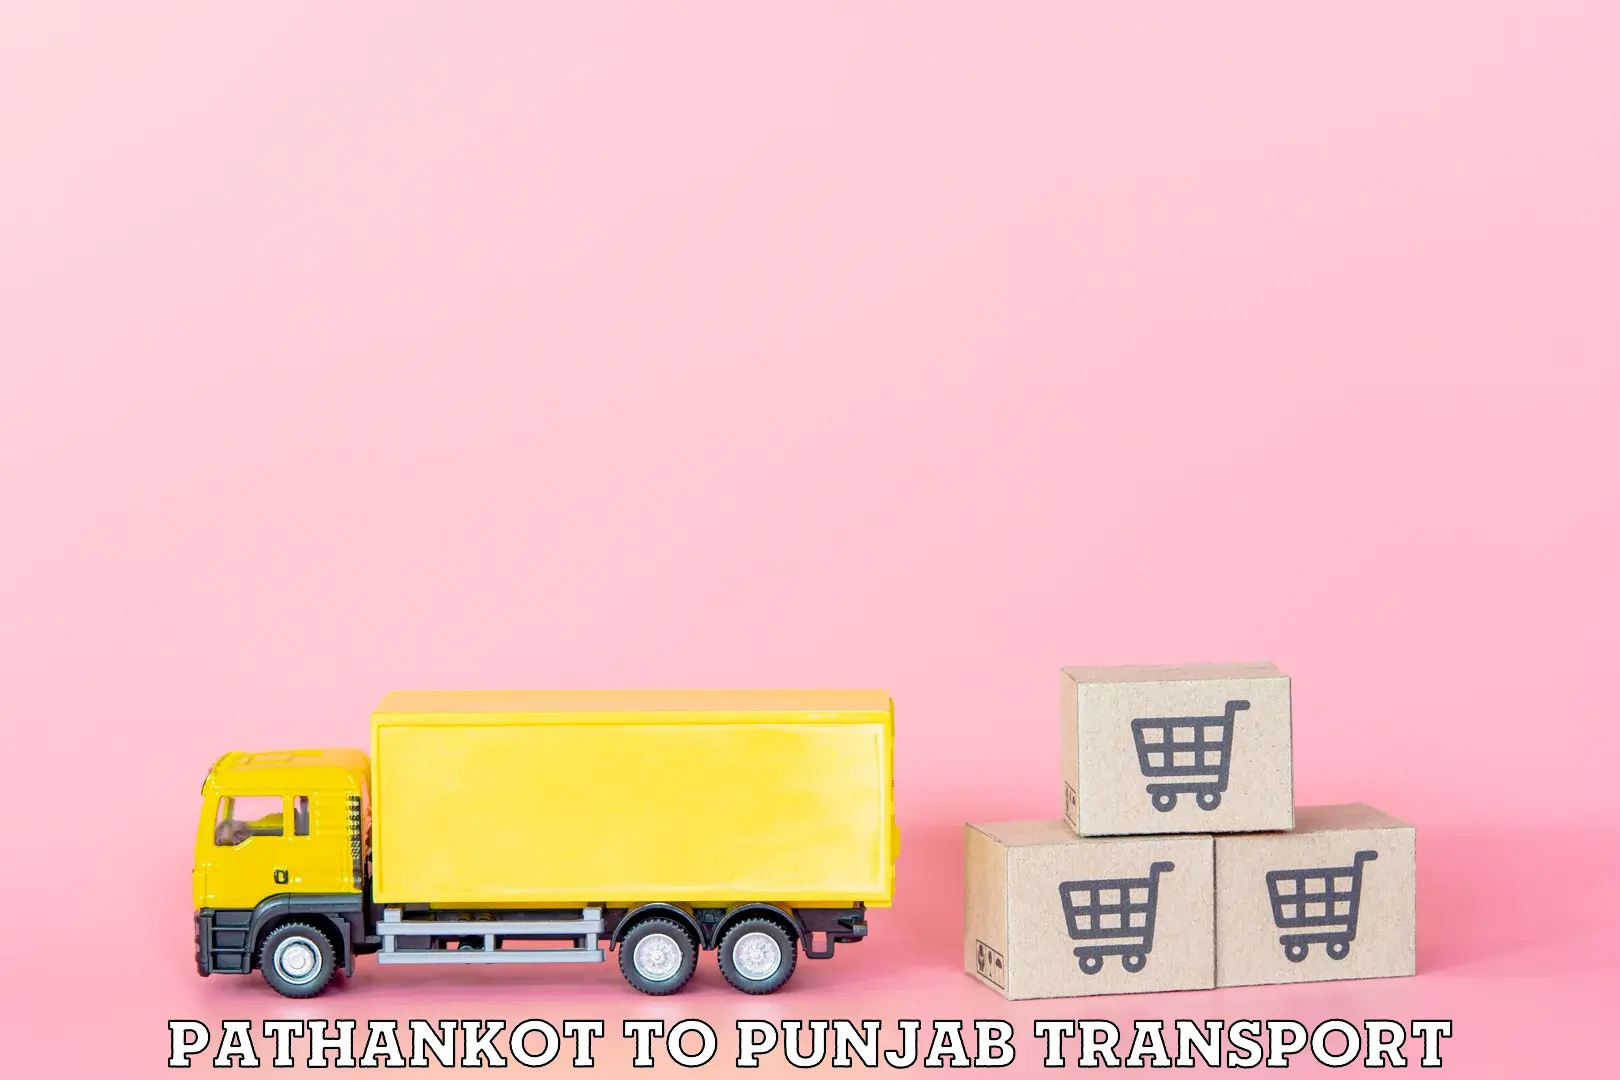 Nearest transport service Pathankot to Amritsar